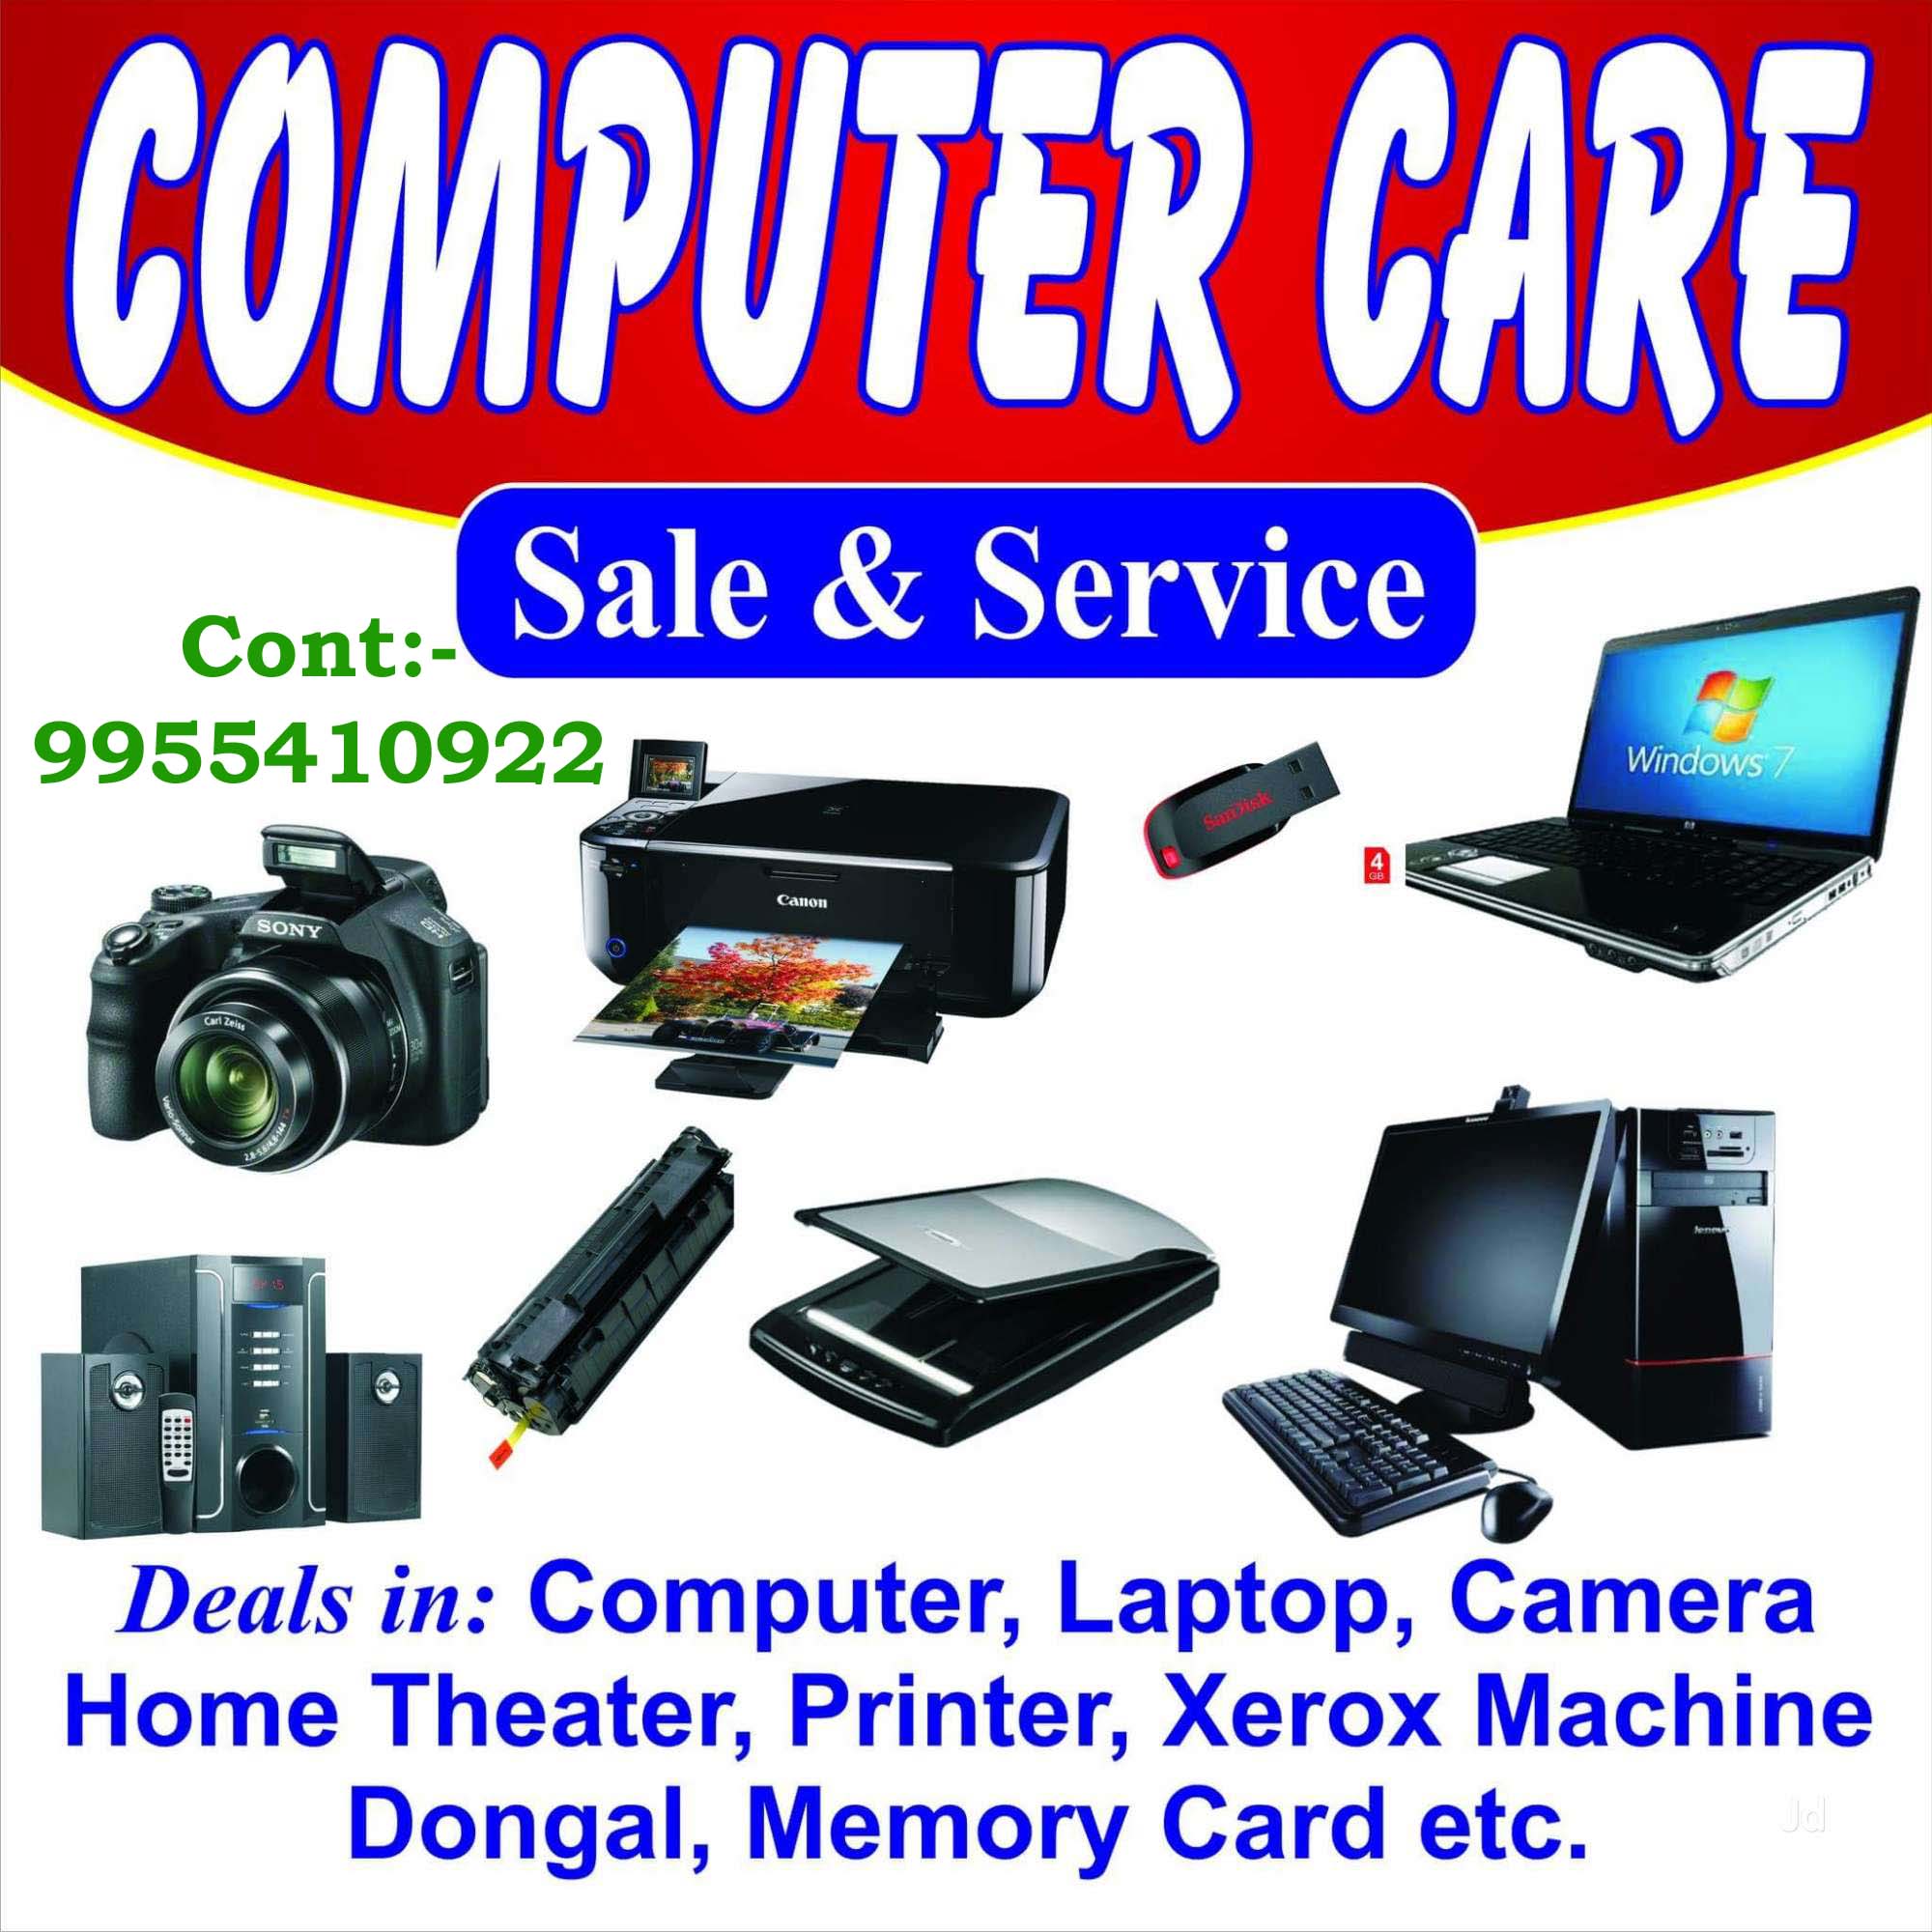 COMPUTER CARE 1